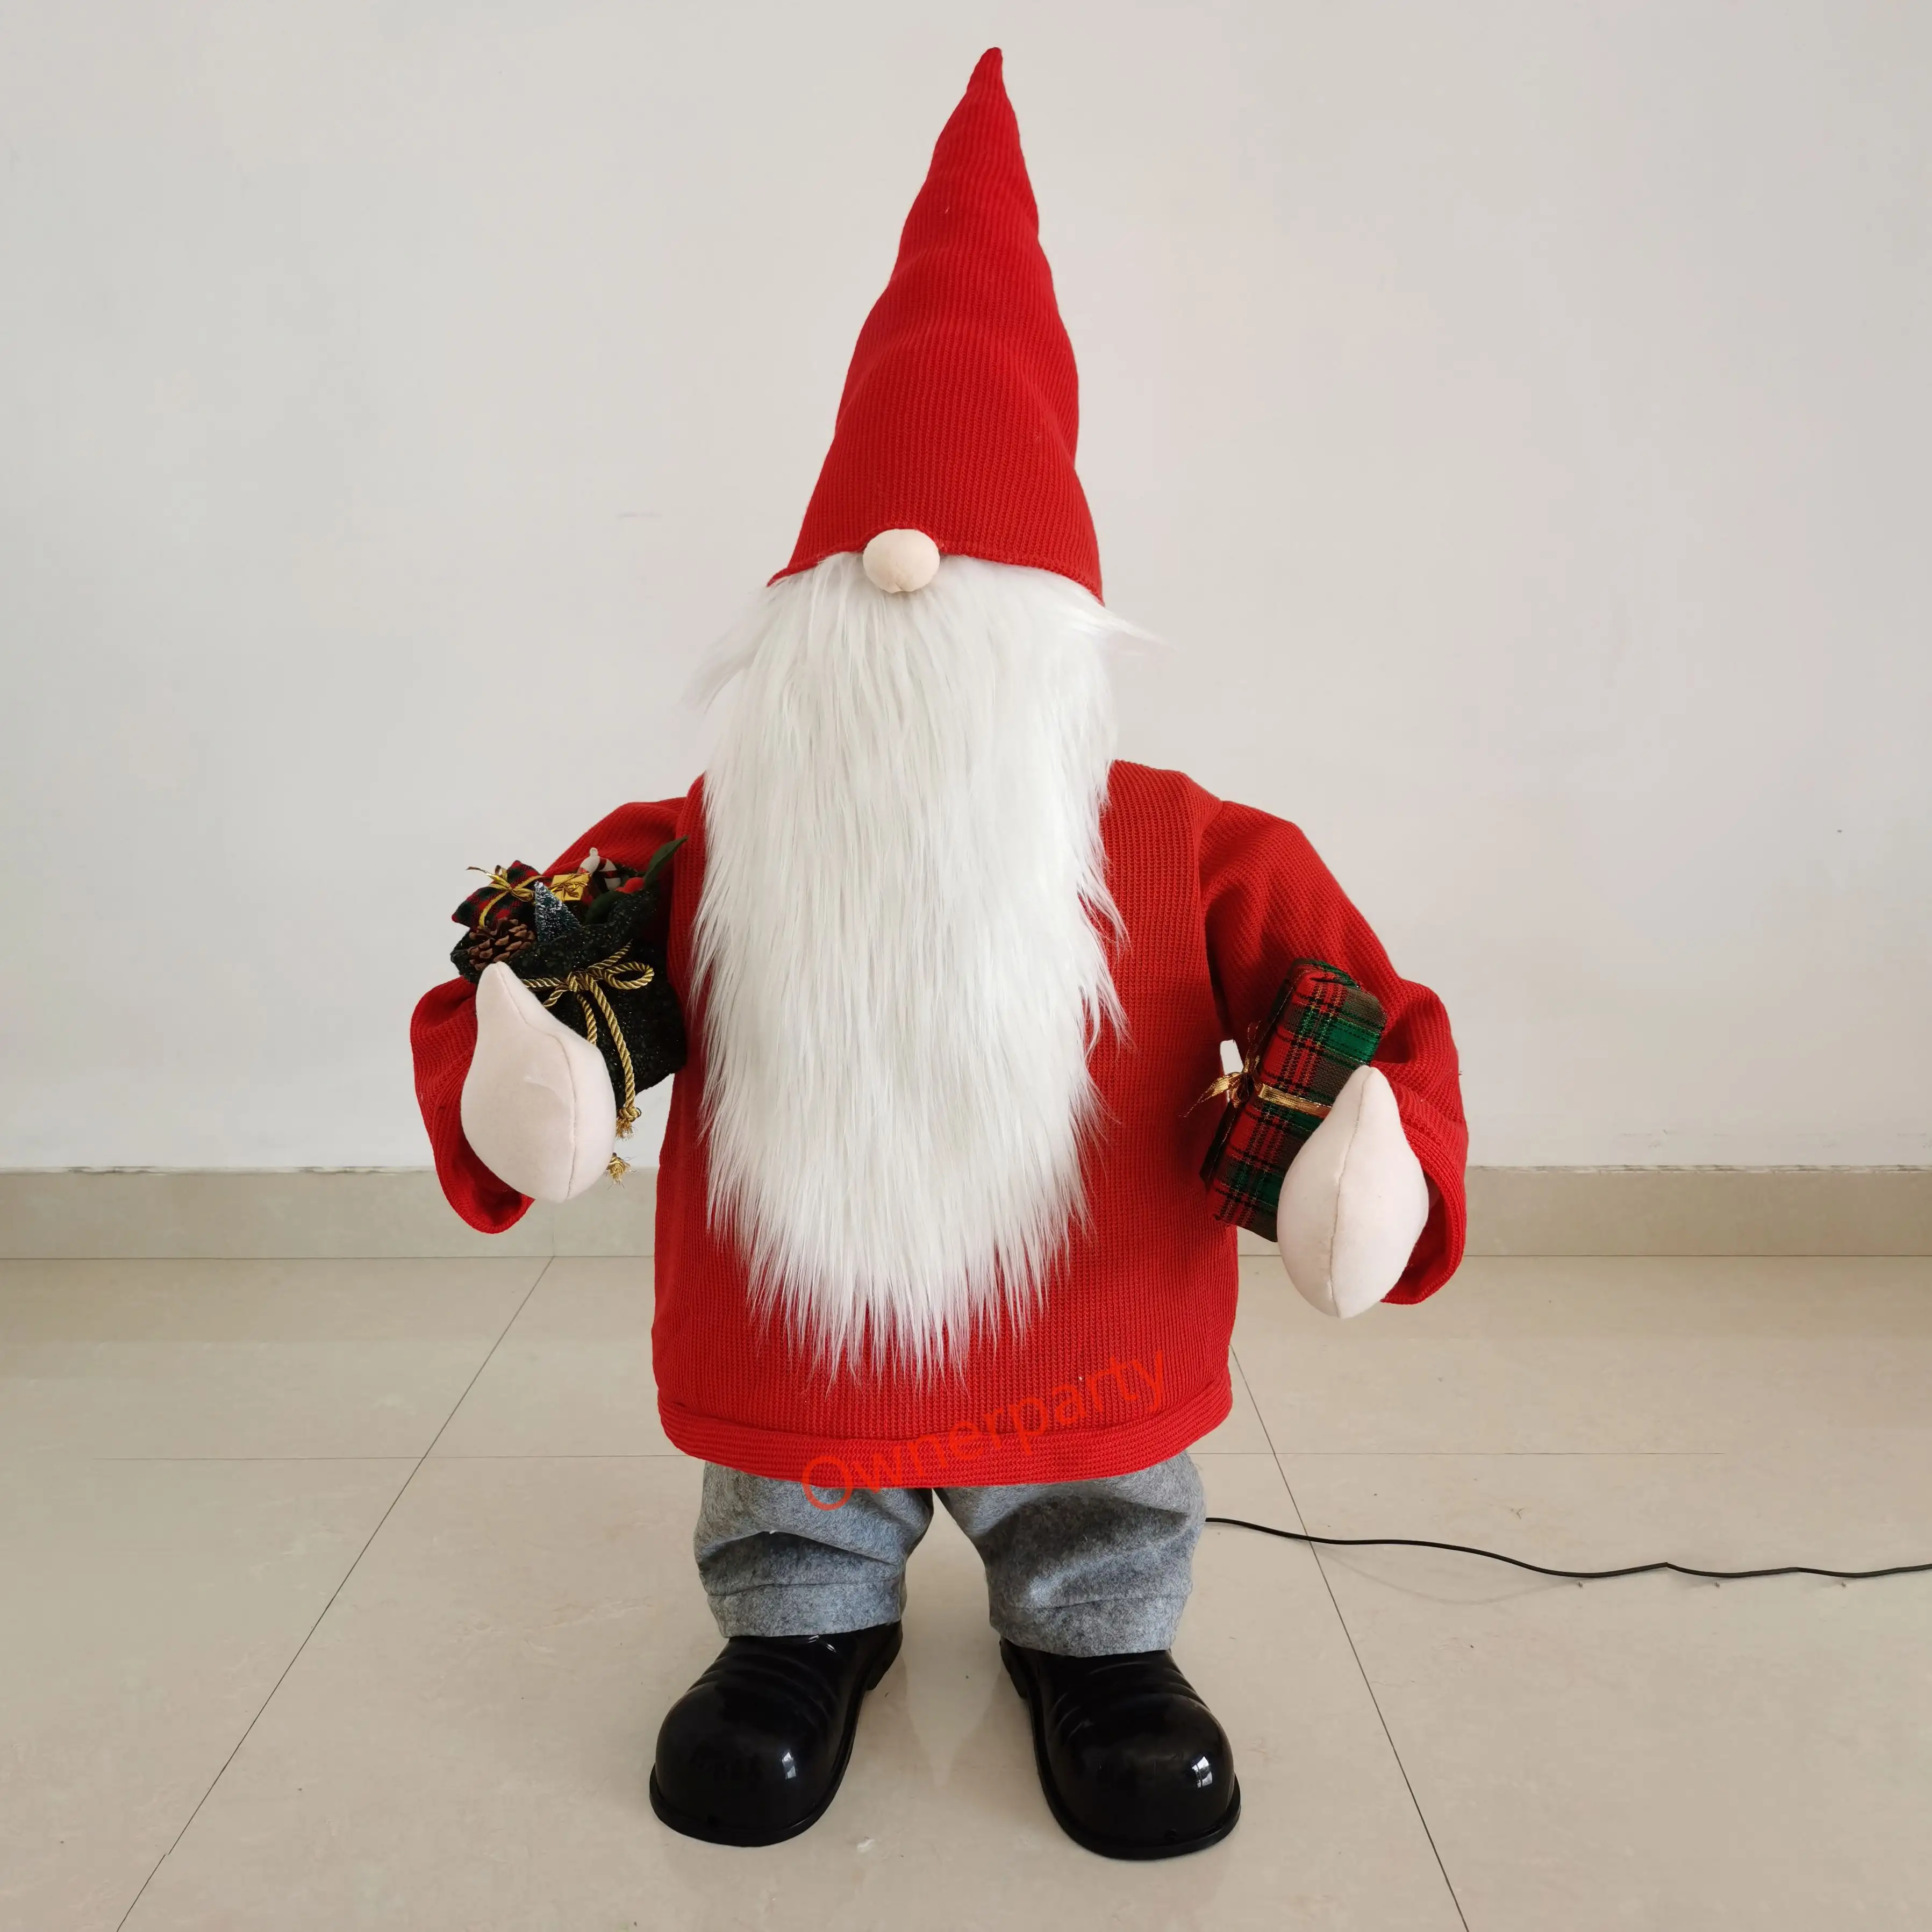 Figuras de Navidad artificiales de tamaño real, adornos navideños animatrónicos para exteriores, adornos navideños animados con música